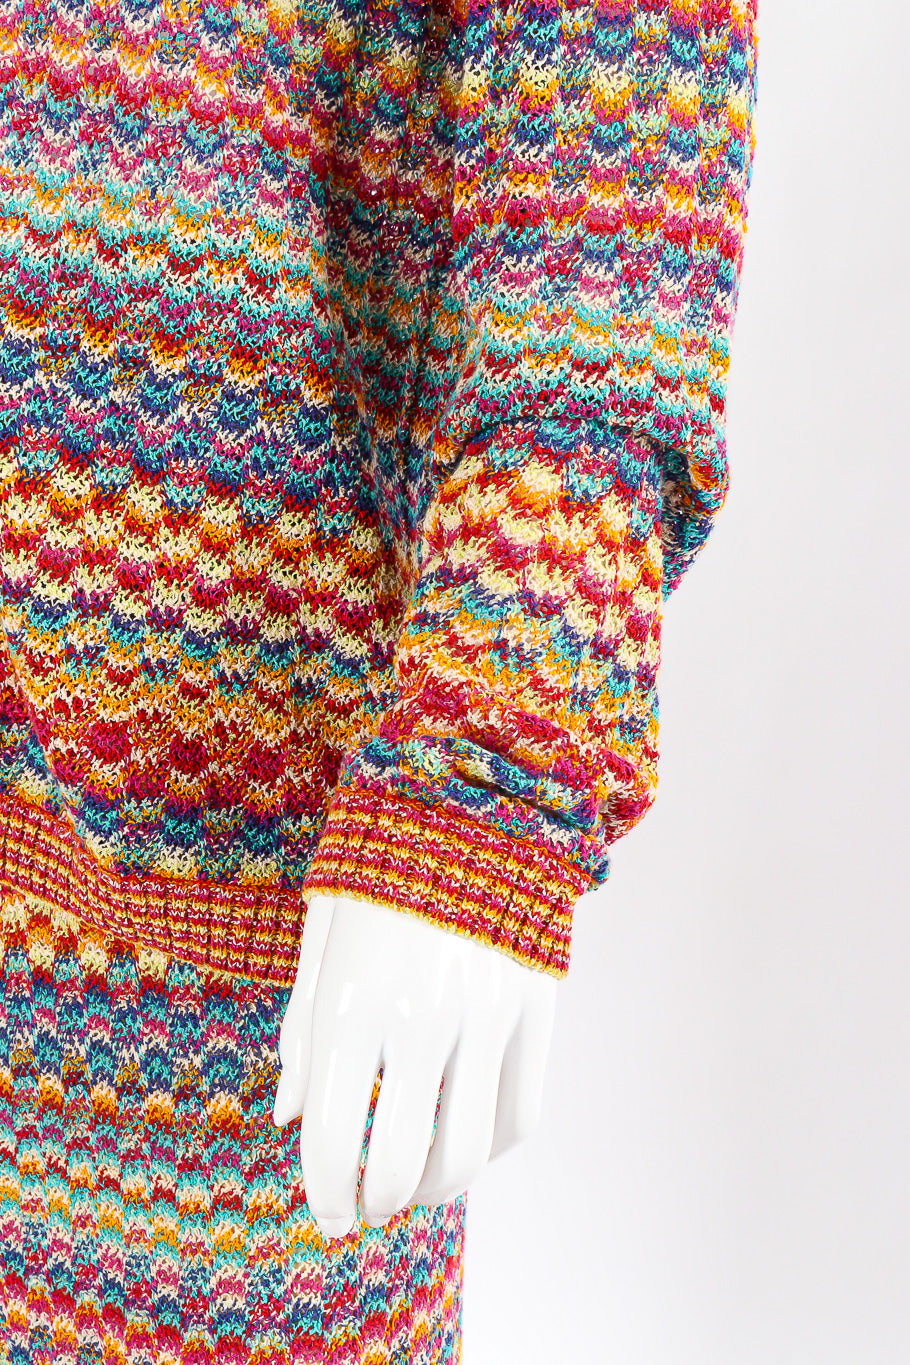 Scallop stripe classic knit 2 piece set by Missoni mannequin sleeve cuff close @recessla